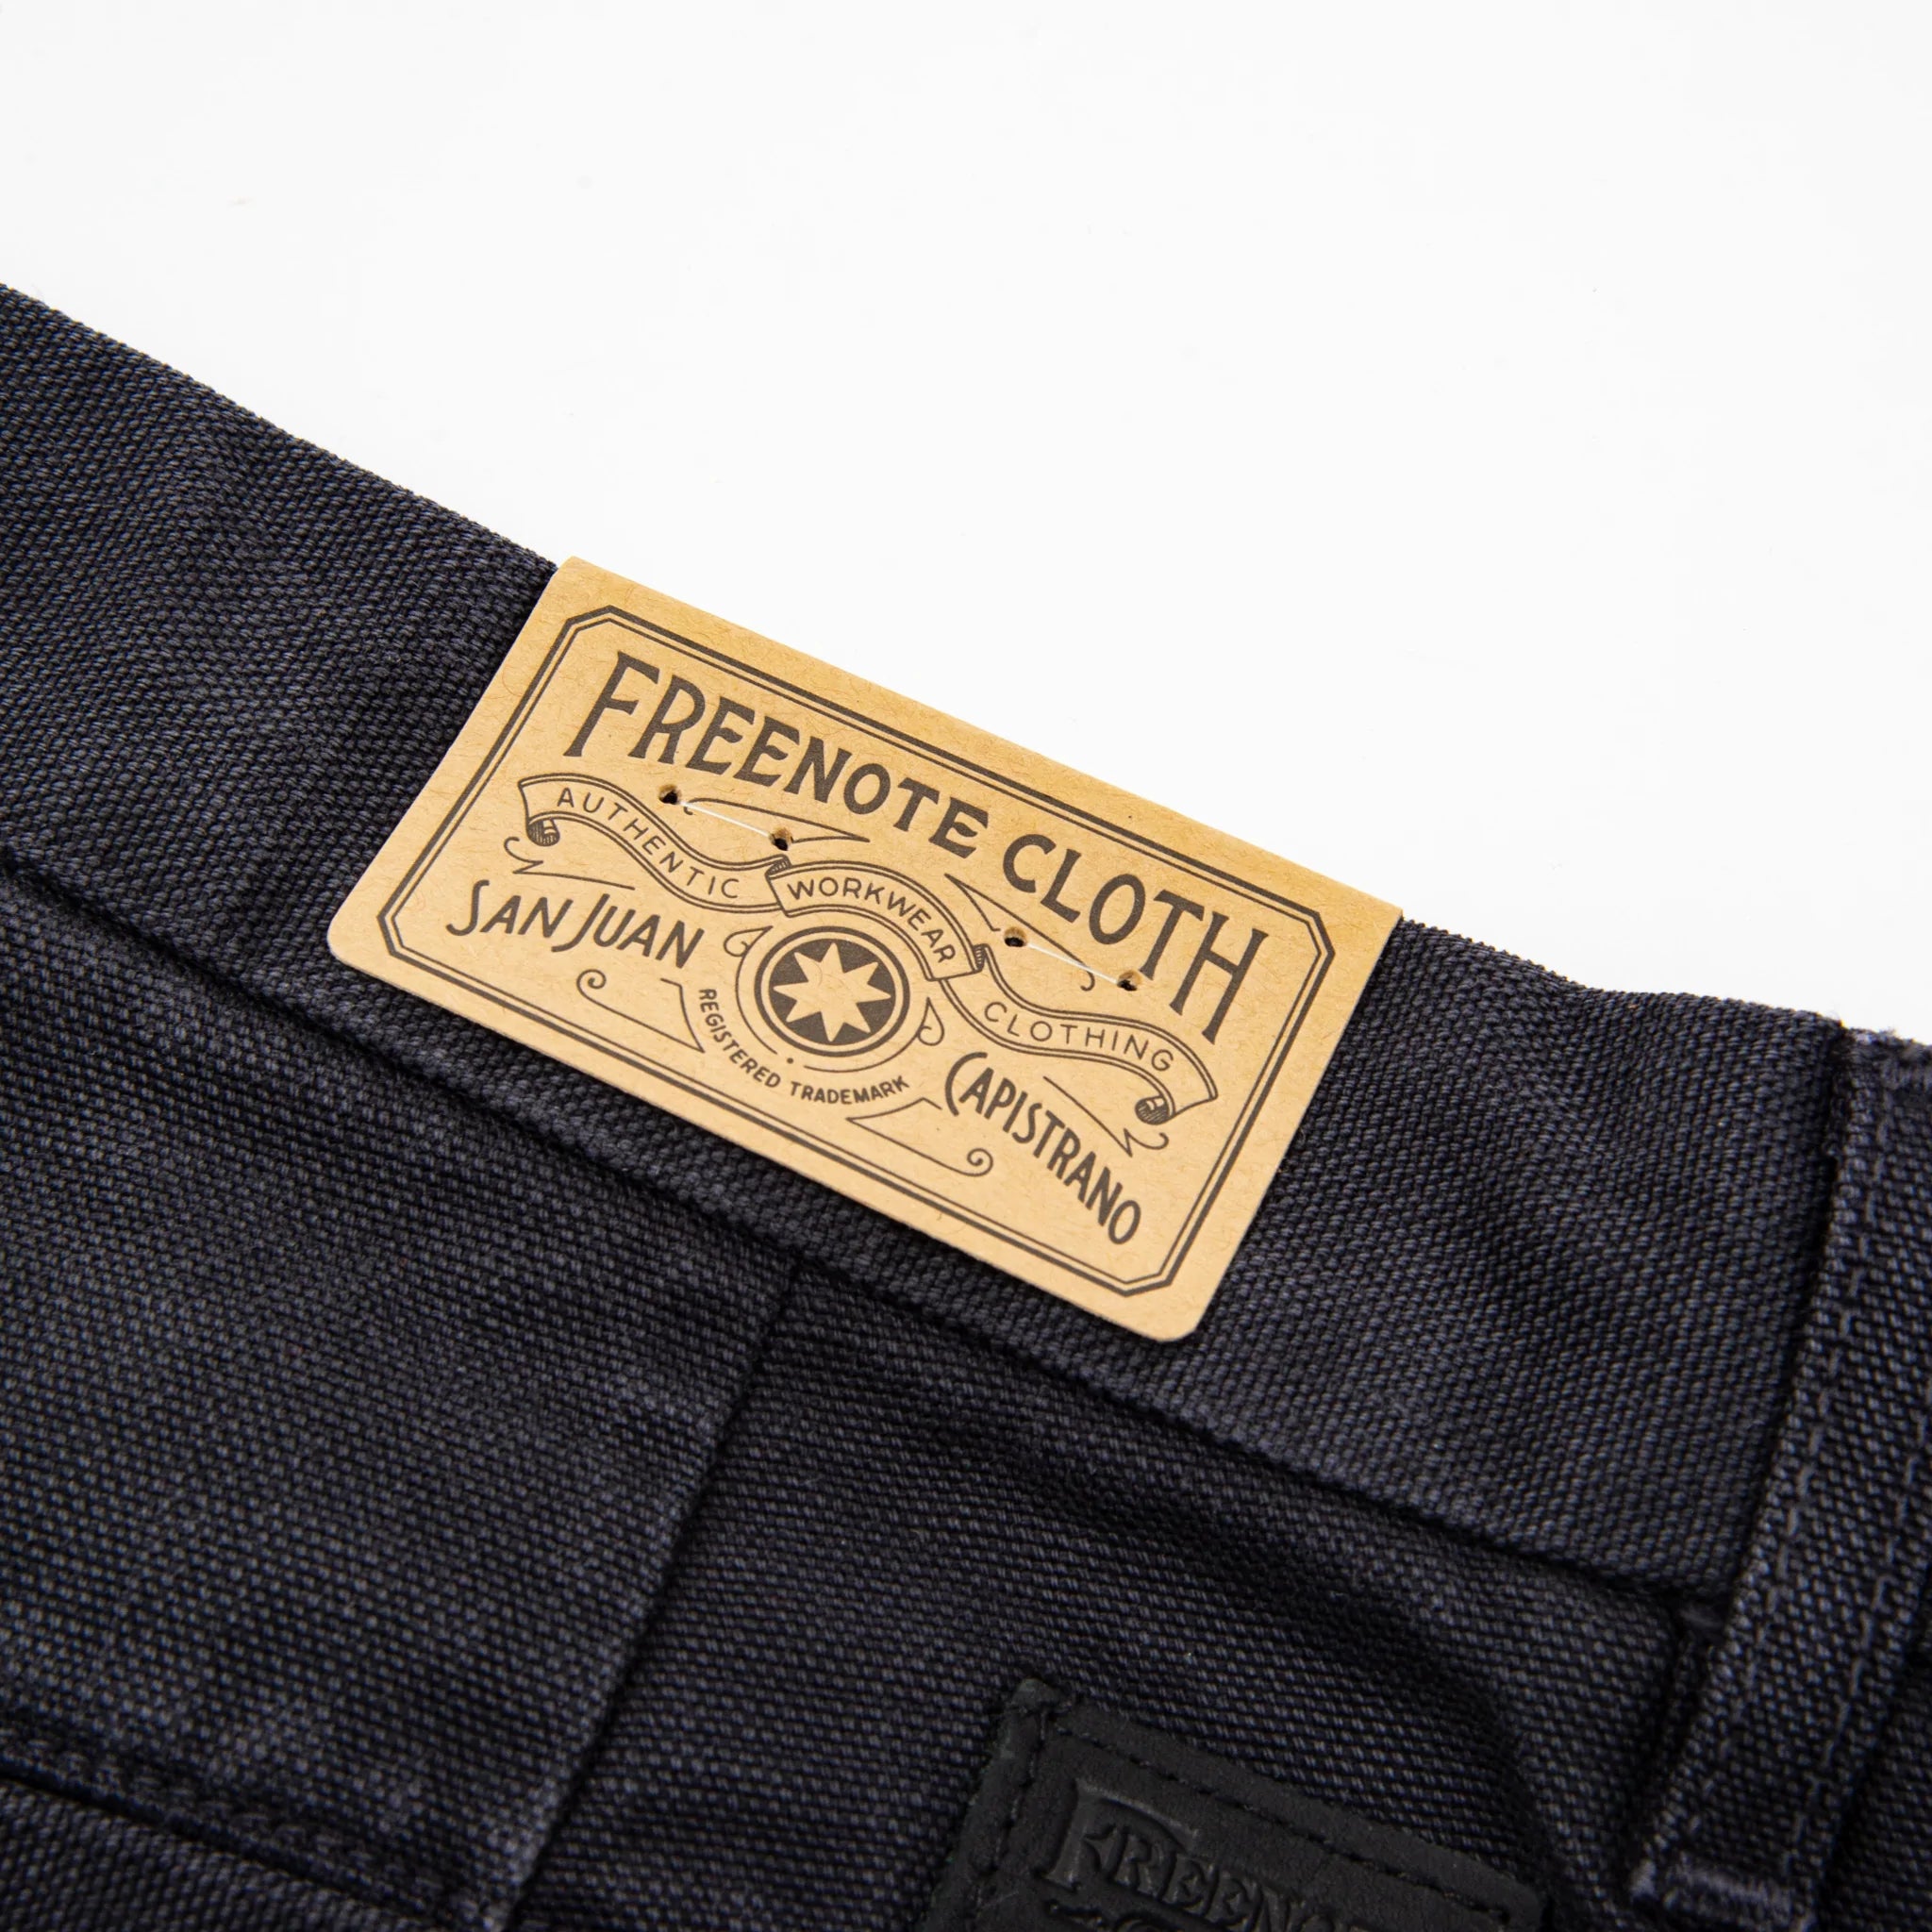 Freenote Cloth - Workers Chino Slim Fit 14oz Slub Black - City Workshop Men's Supply Co.